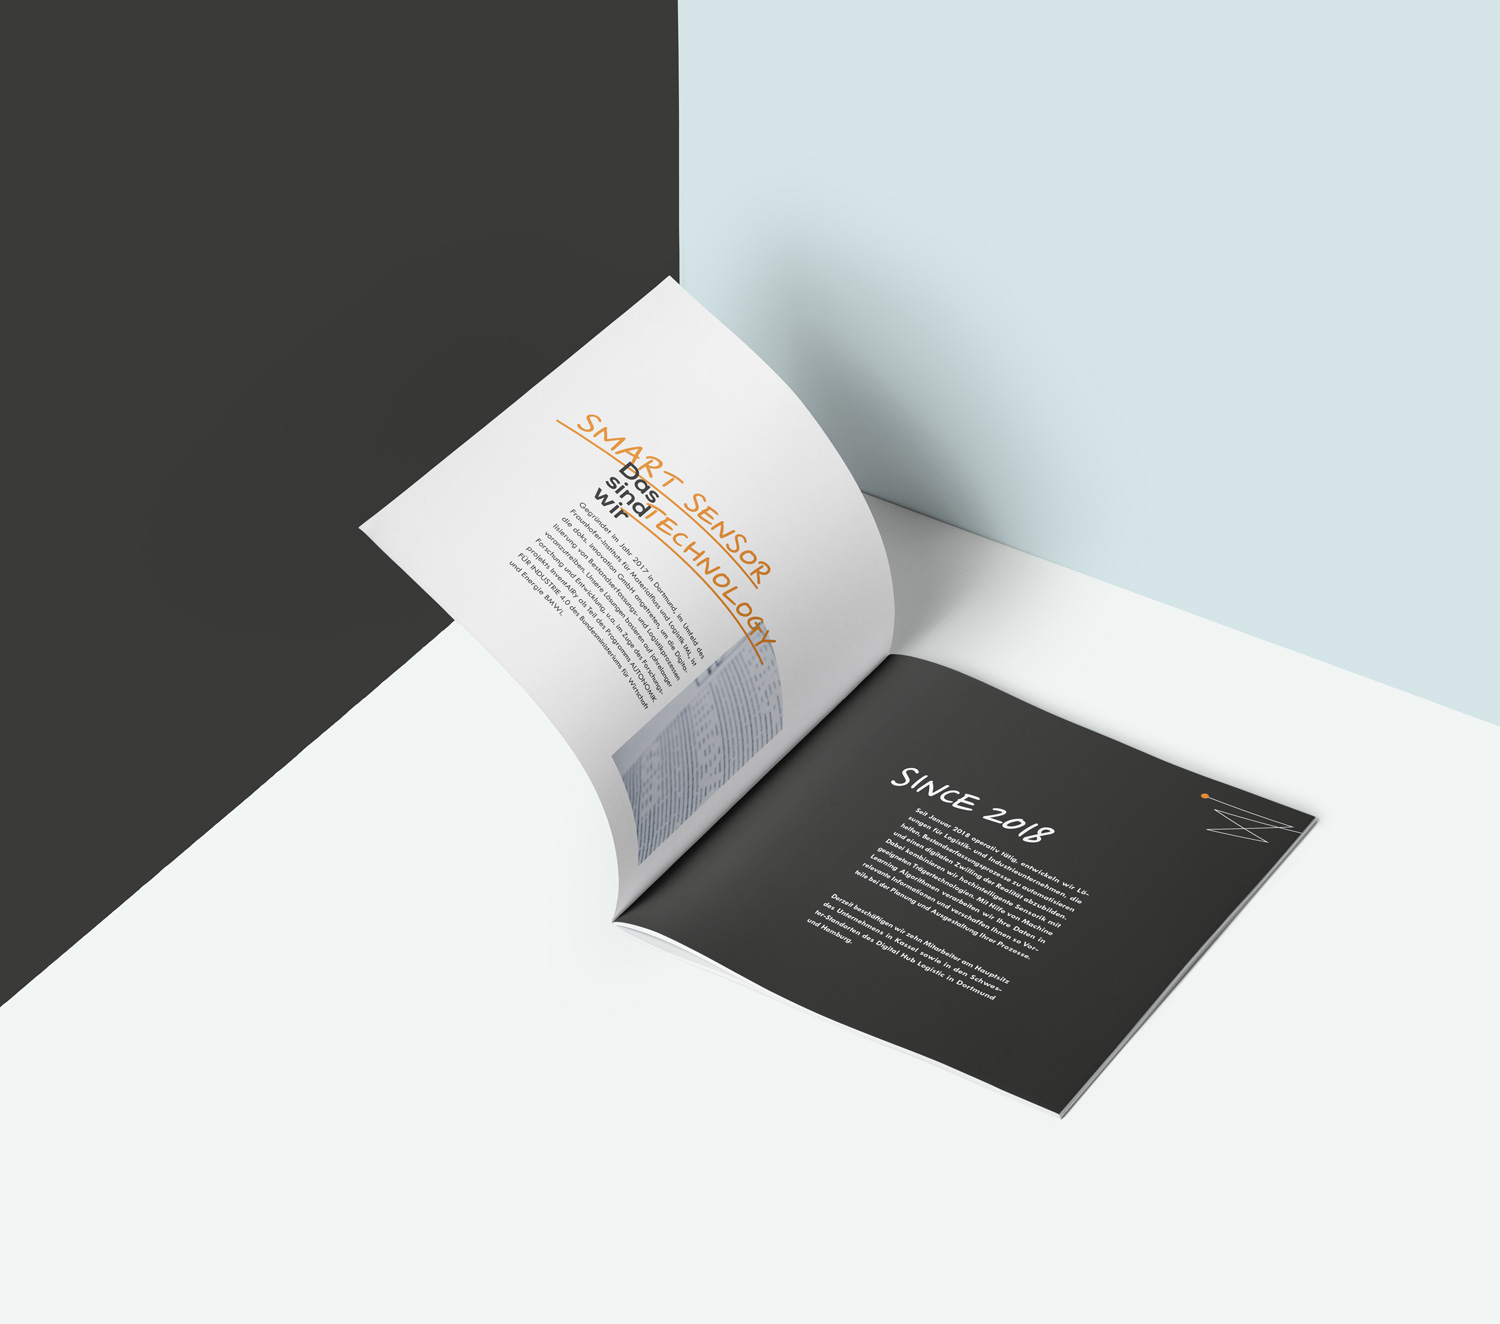 Broschüre design doks kassel innovation startup